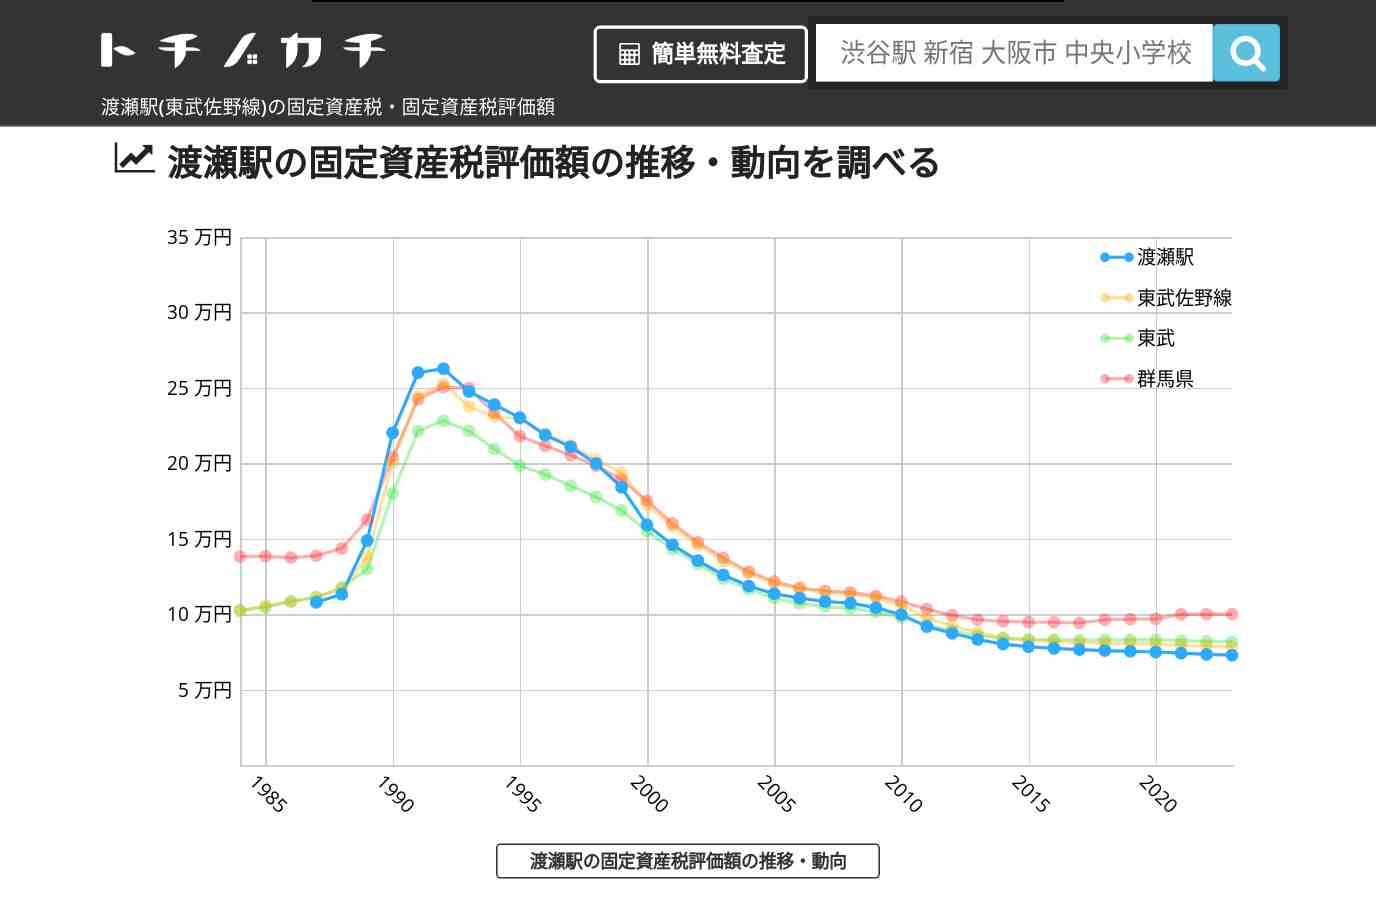 渡瀬駅(東武佐野線)の固定資産税・固定資産税評価額 | トチノカチ